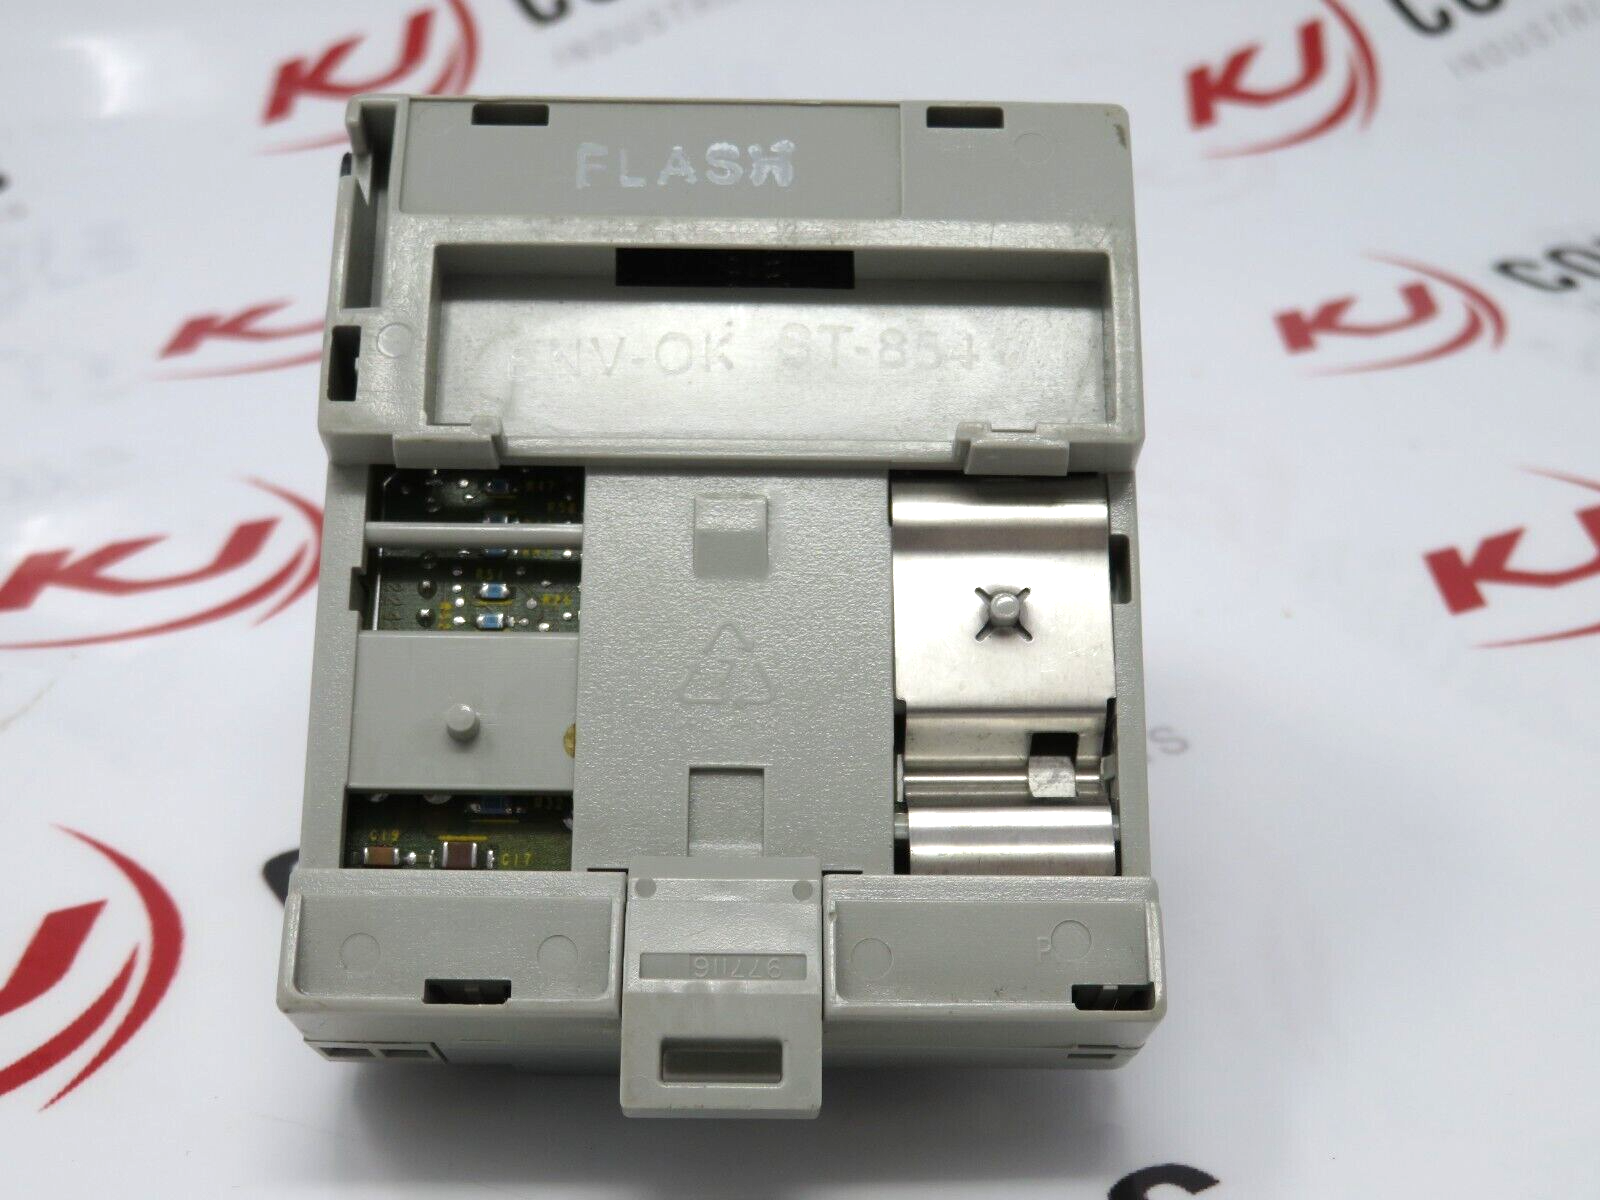 Allen-Bradley 1794-ACN Flex I/O ControlNet Adapter